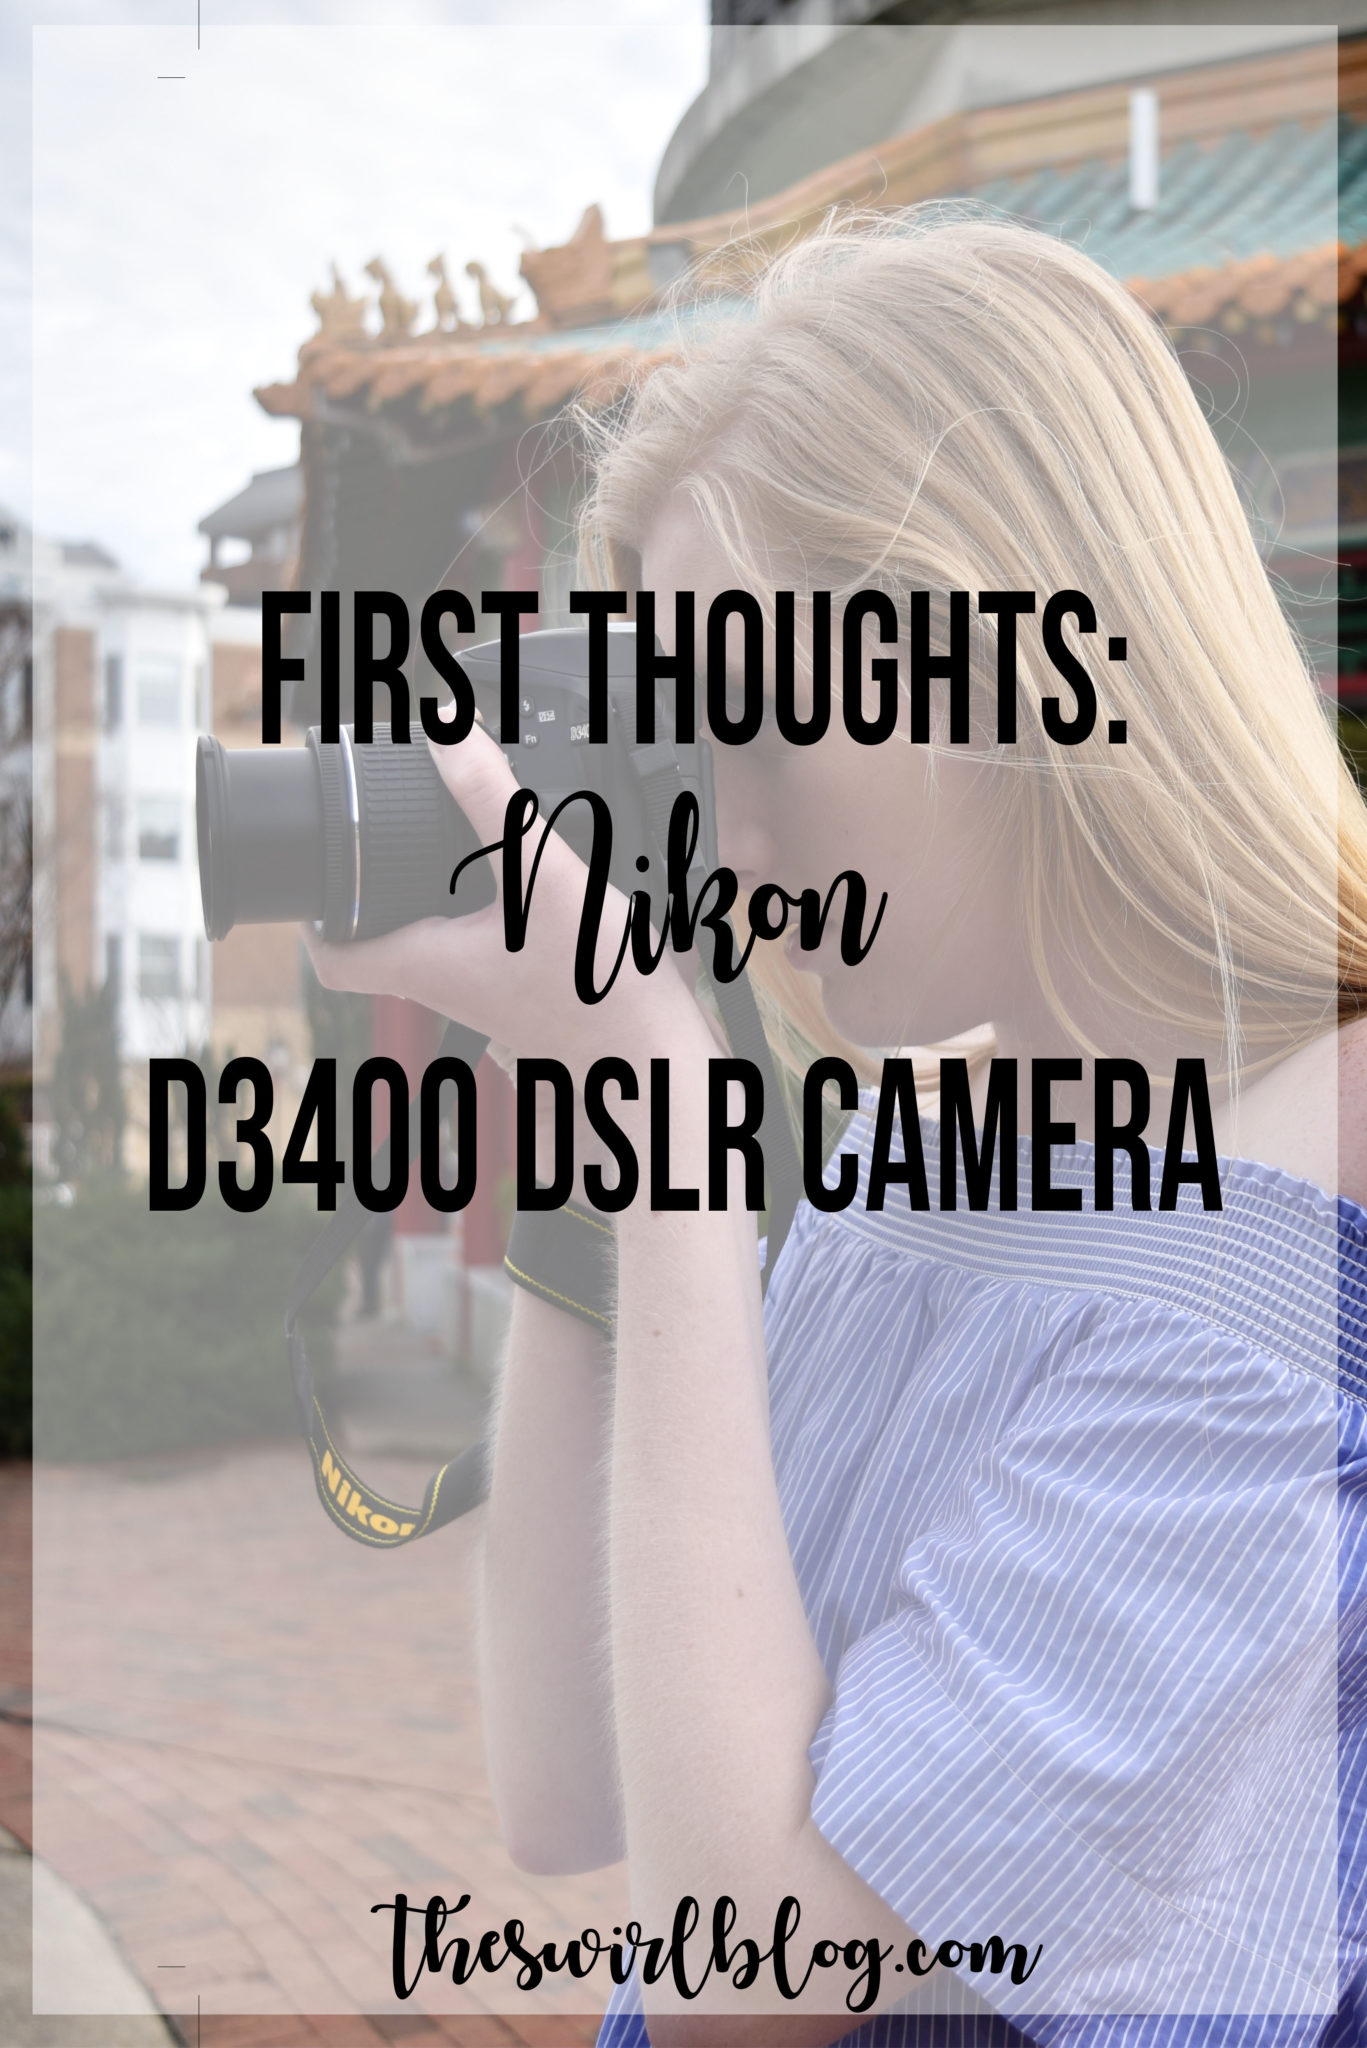 Nikon D3400 DSLR